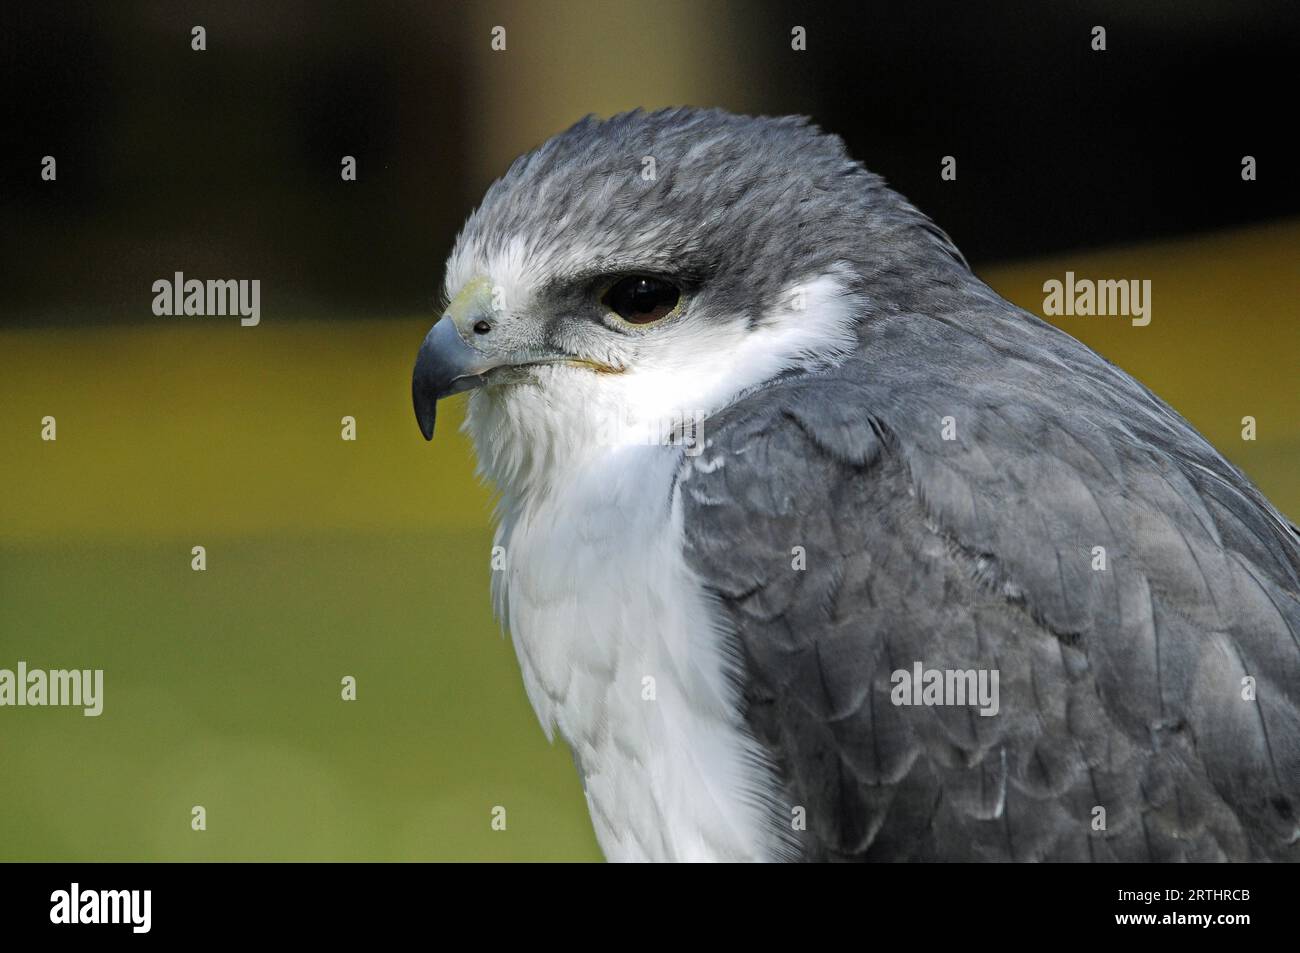 Bird Of prey Stockfoto